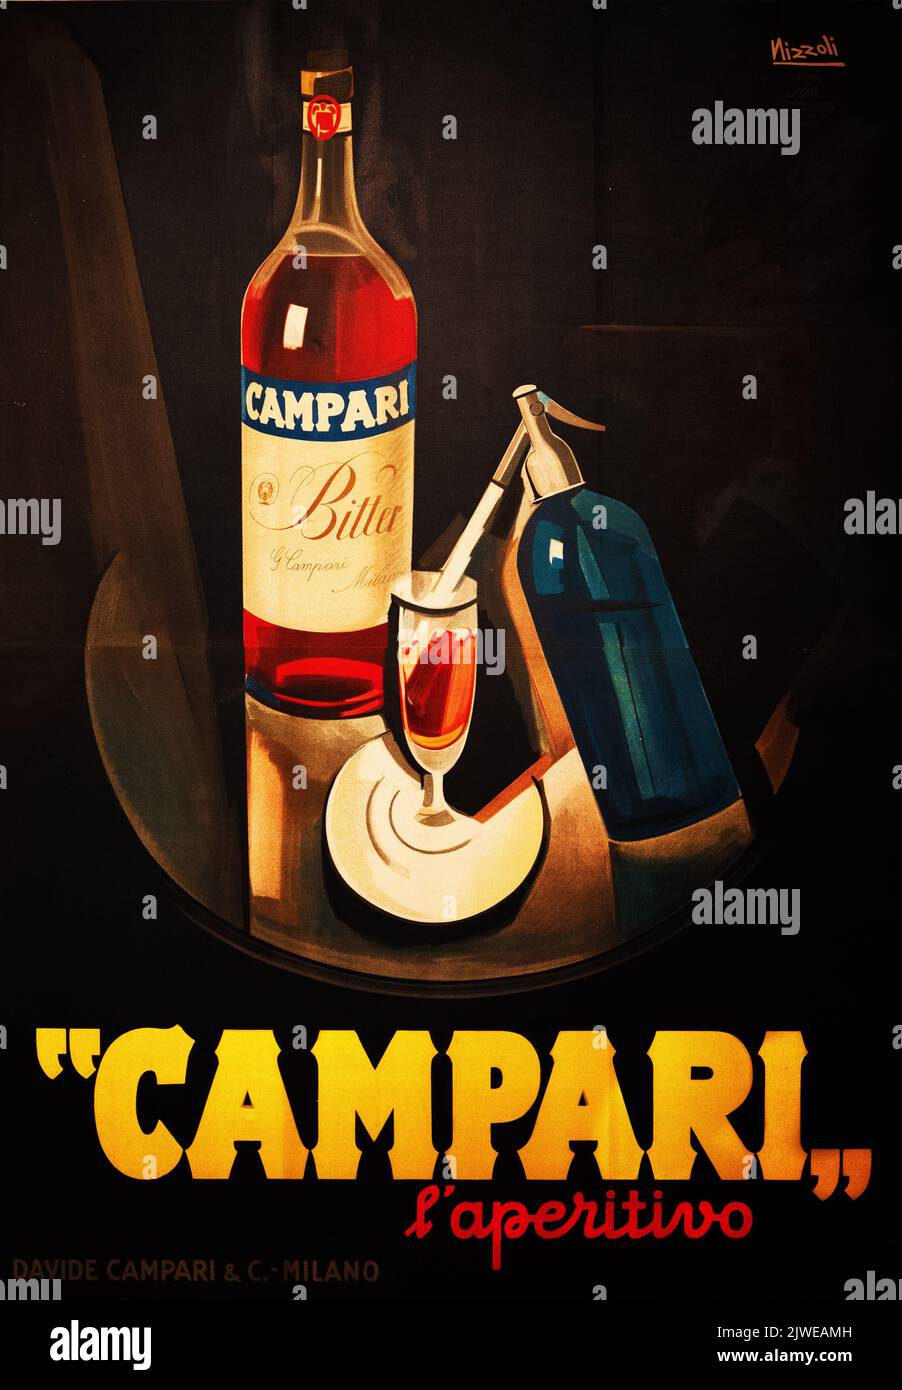 Old advertising poster of Campari. Image taken at the Galleria Campari close to Milan. Stock Photo